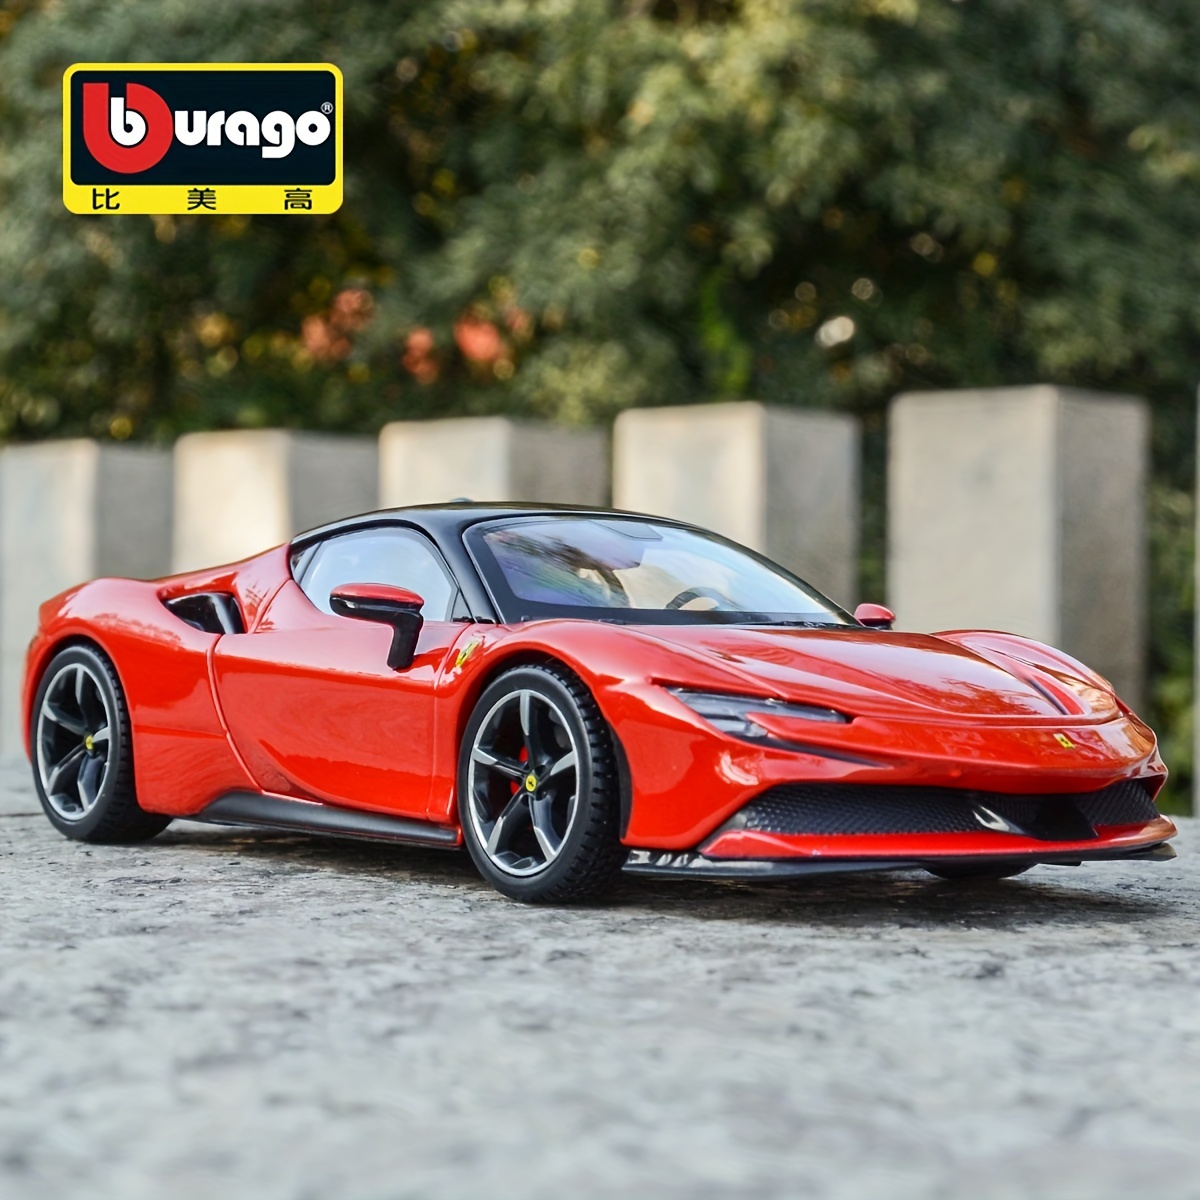 Luxus-Fußmatten-Set Ferrari Rot